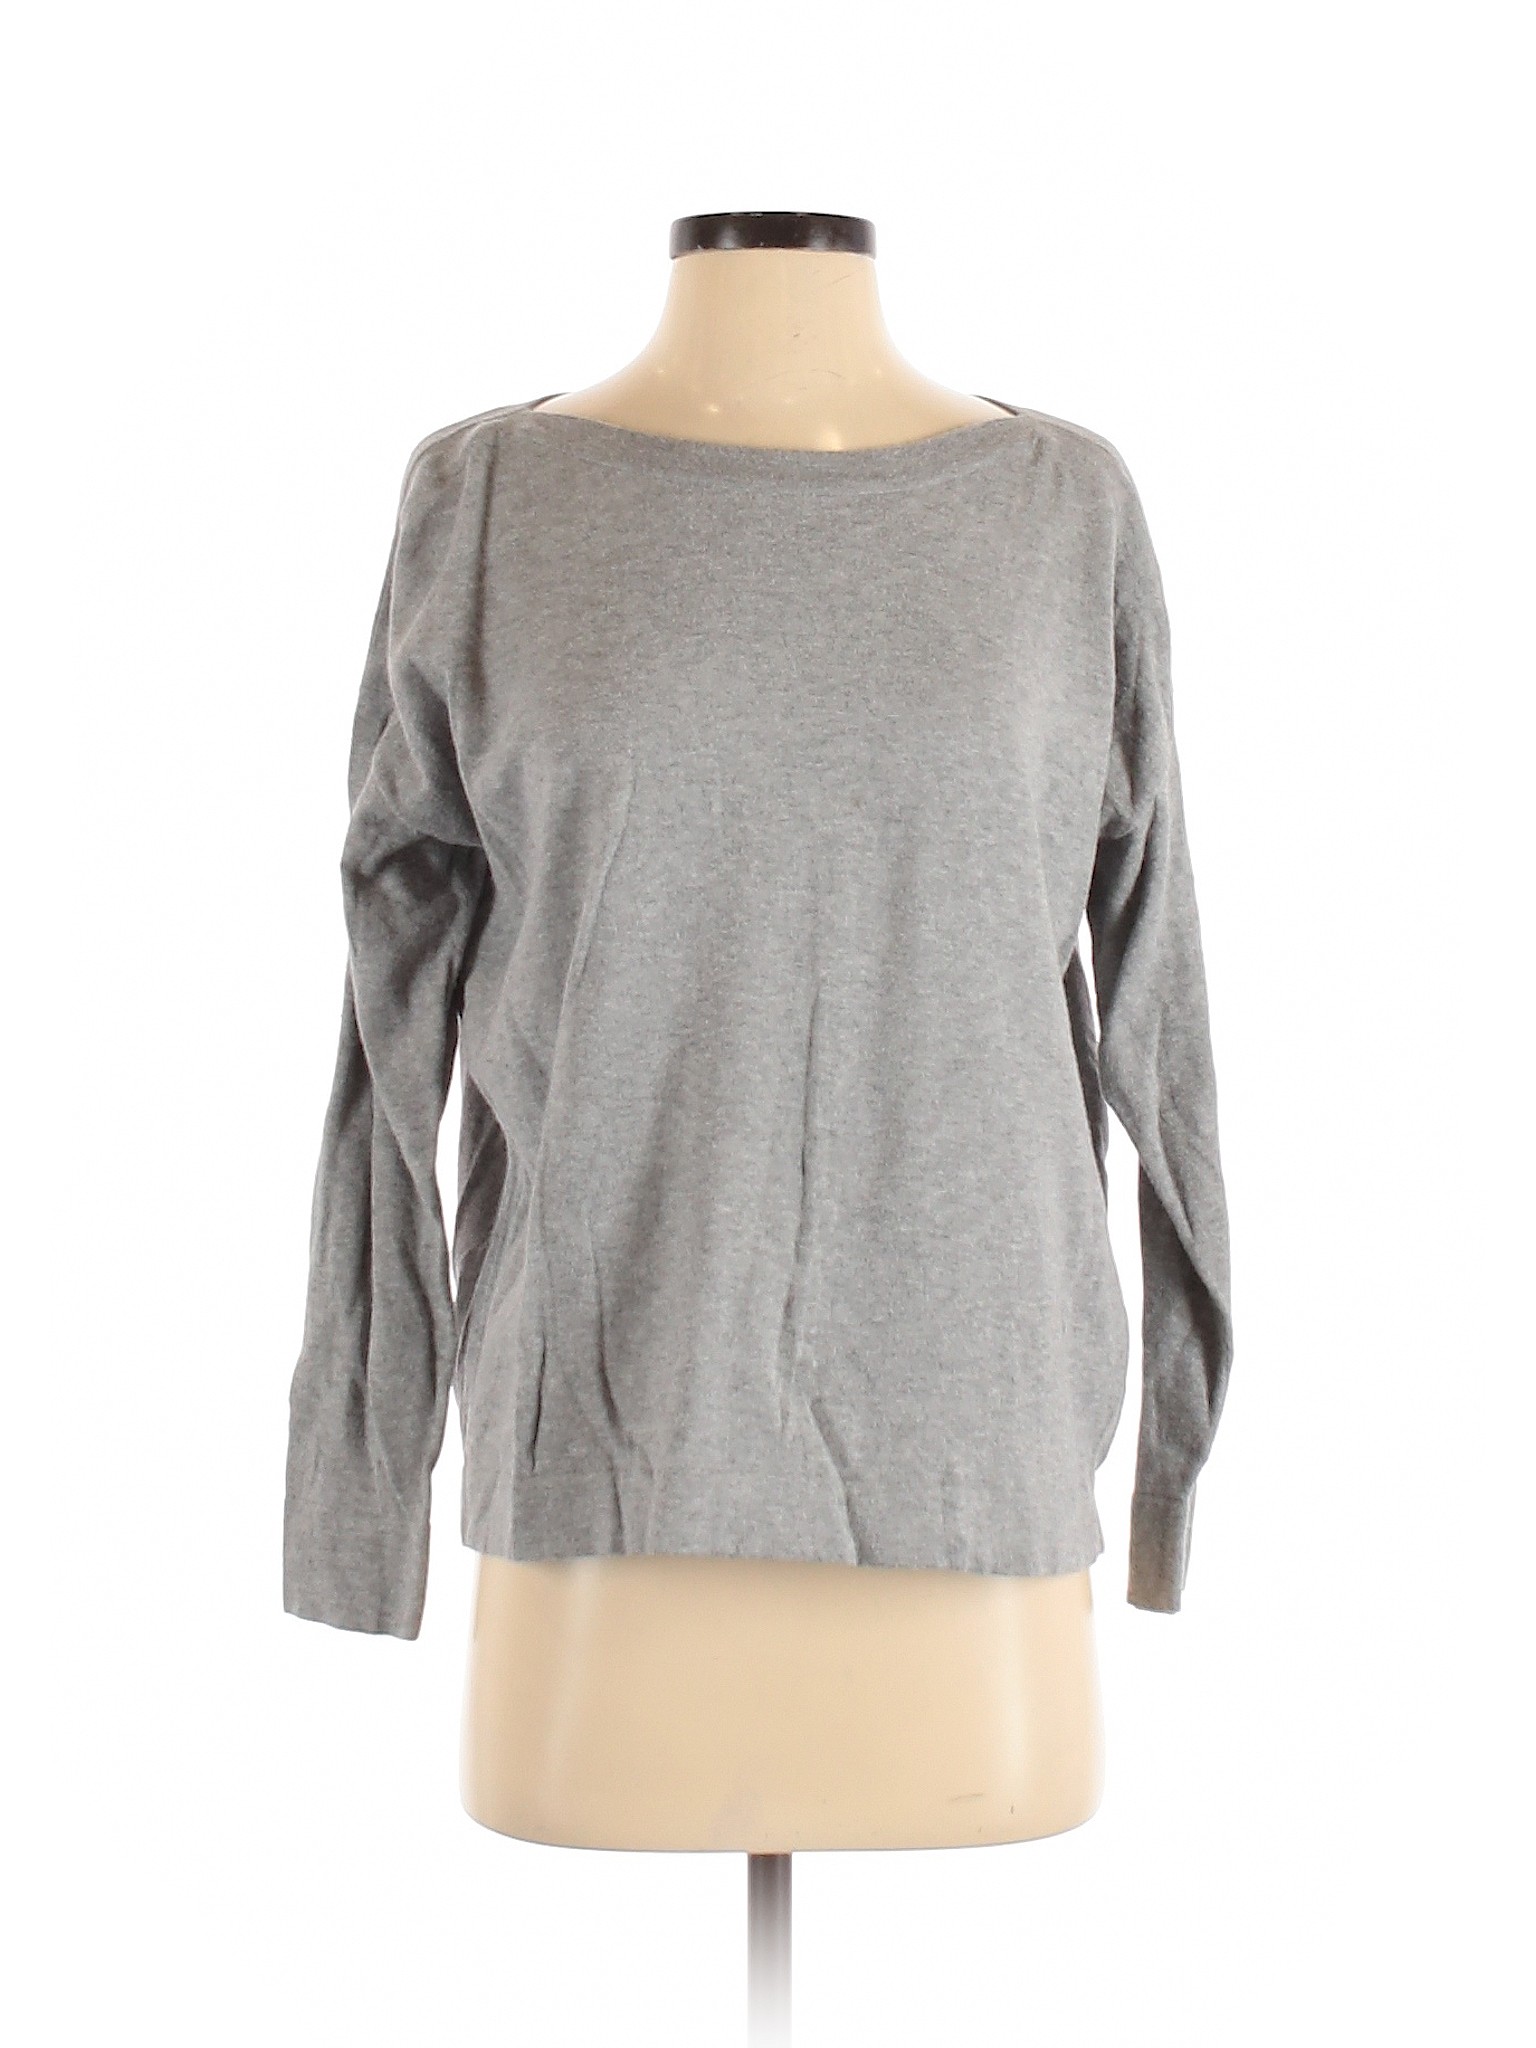 Eileen Fisher Women Gray Sweatshirt XS | eBay